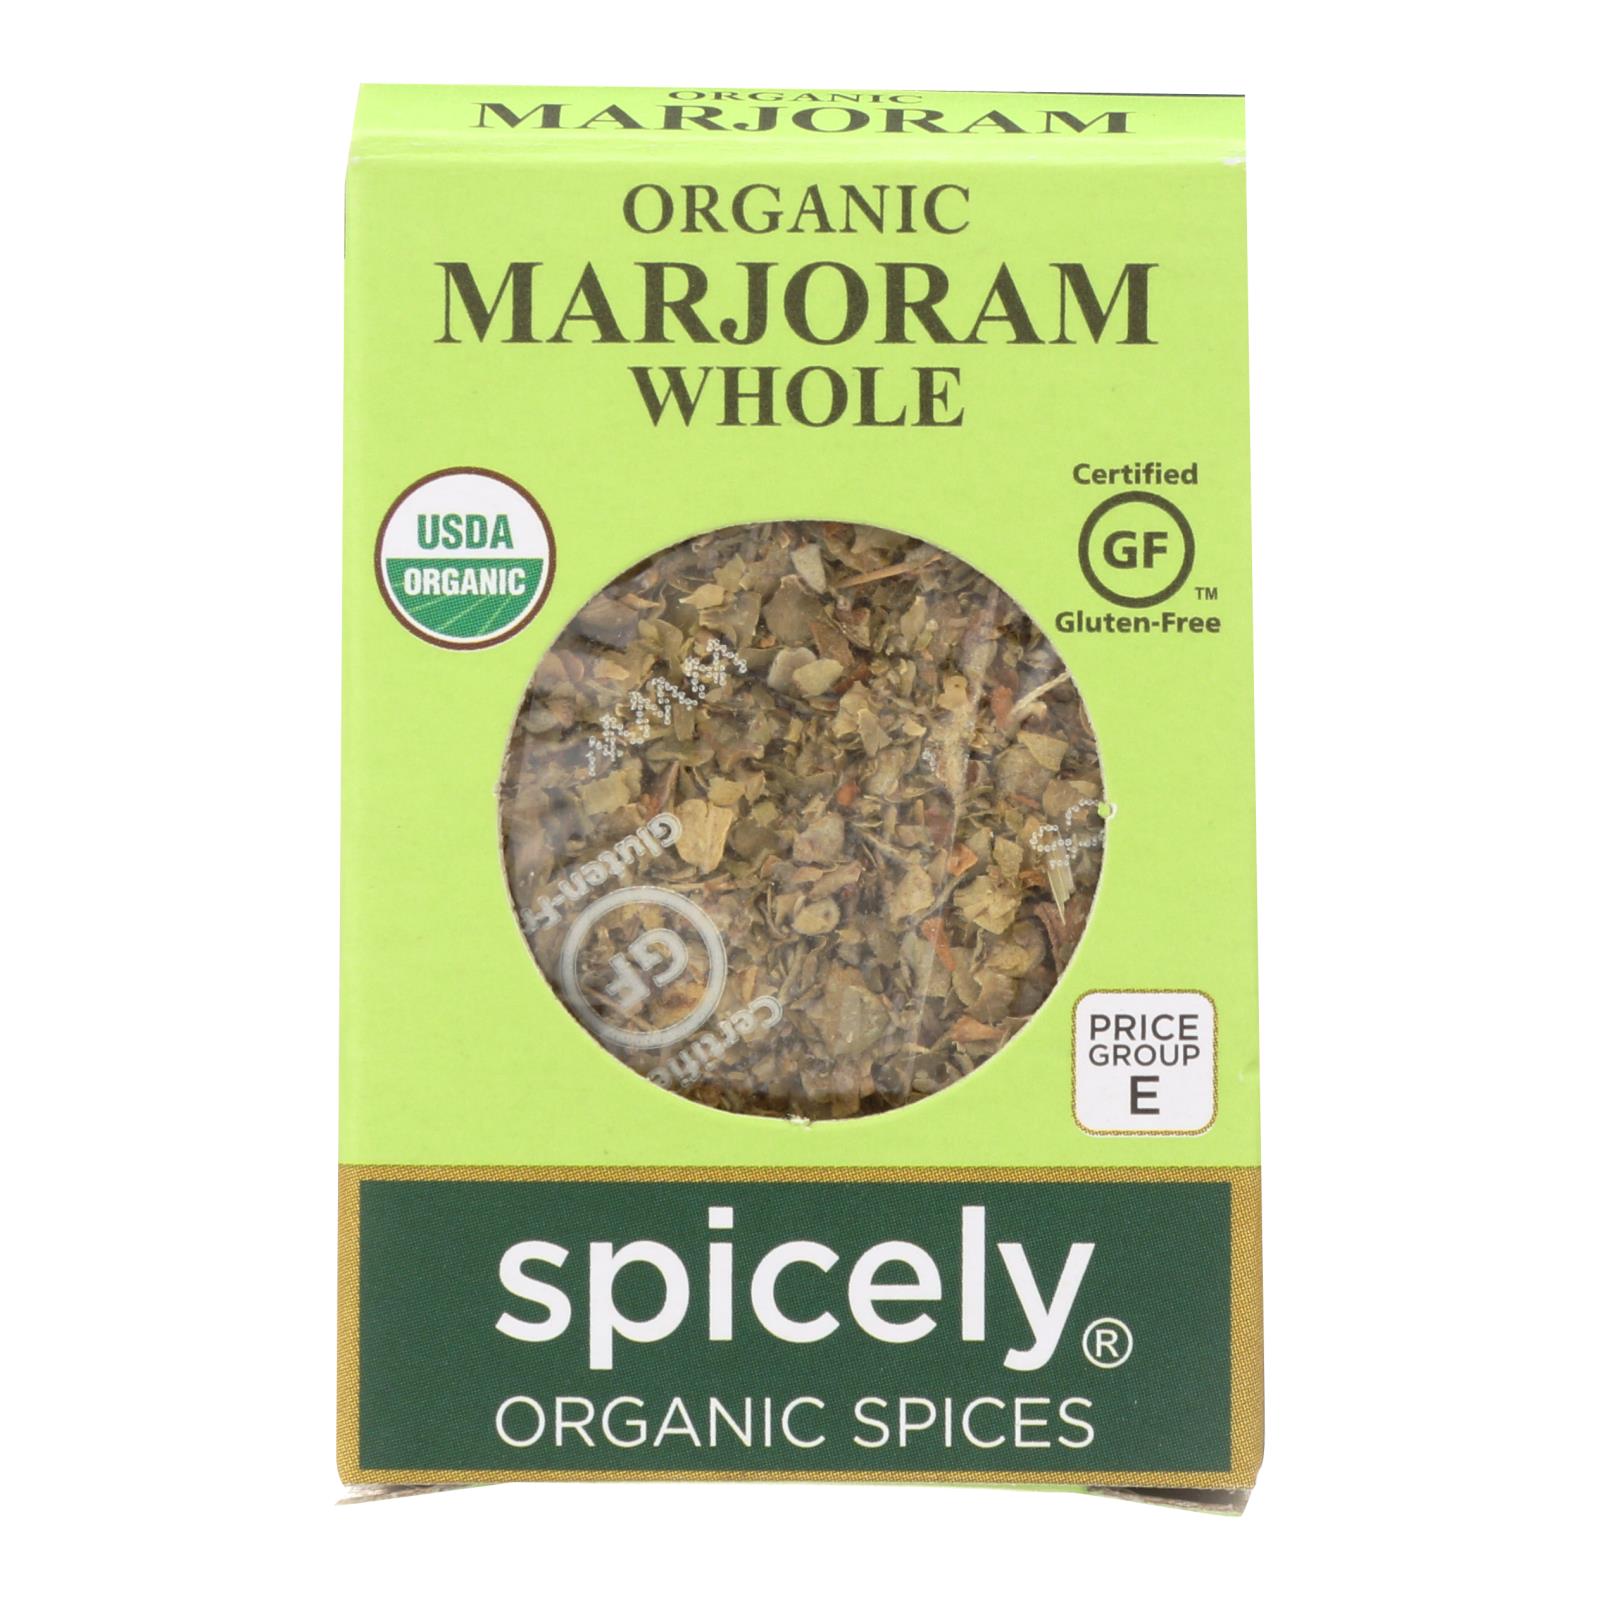 Spicely Organics - Organic Marjoram - Whole - 6개 묶음상품 - 0.1 oz.